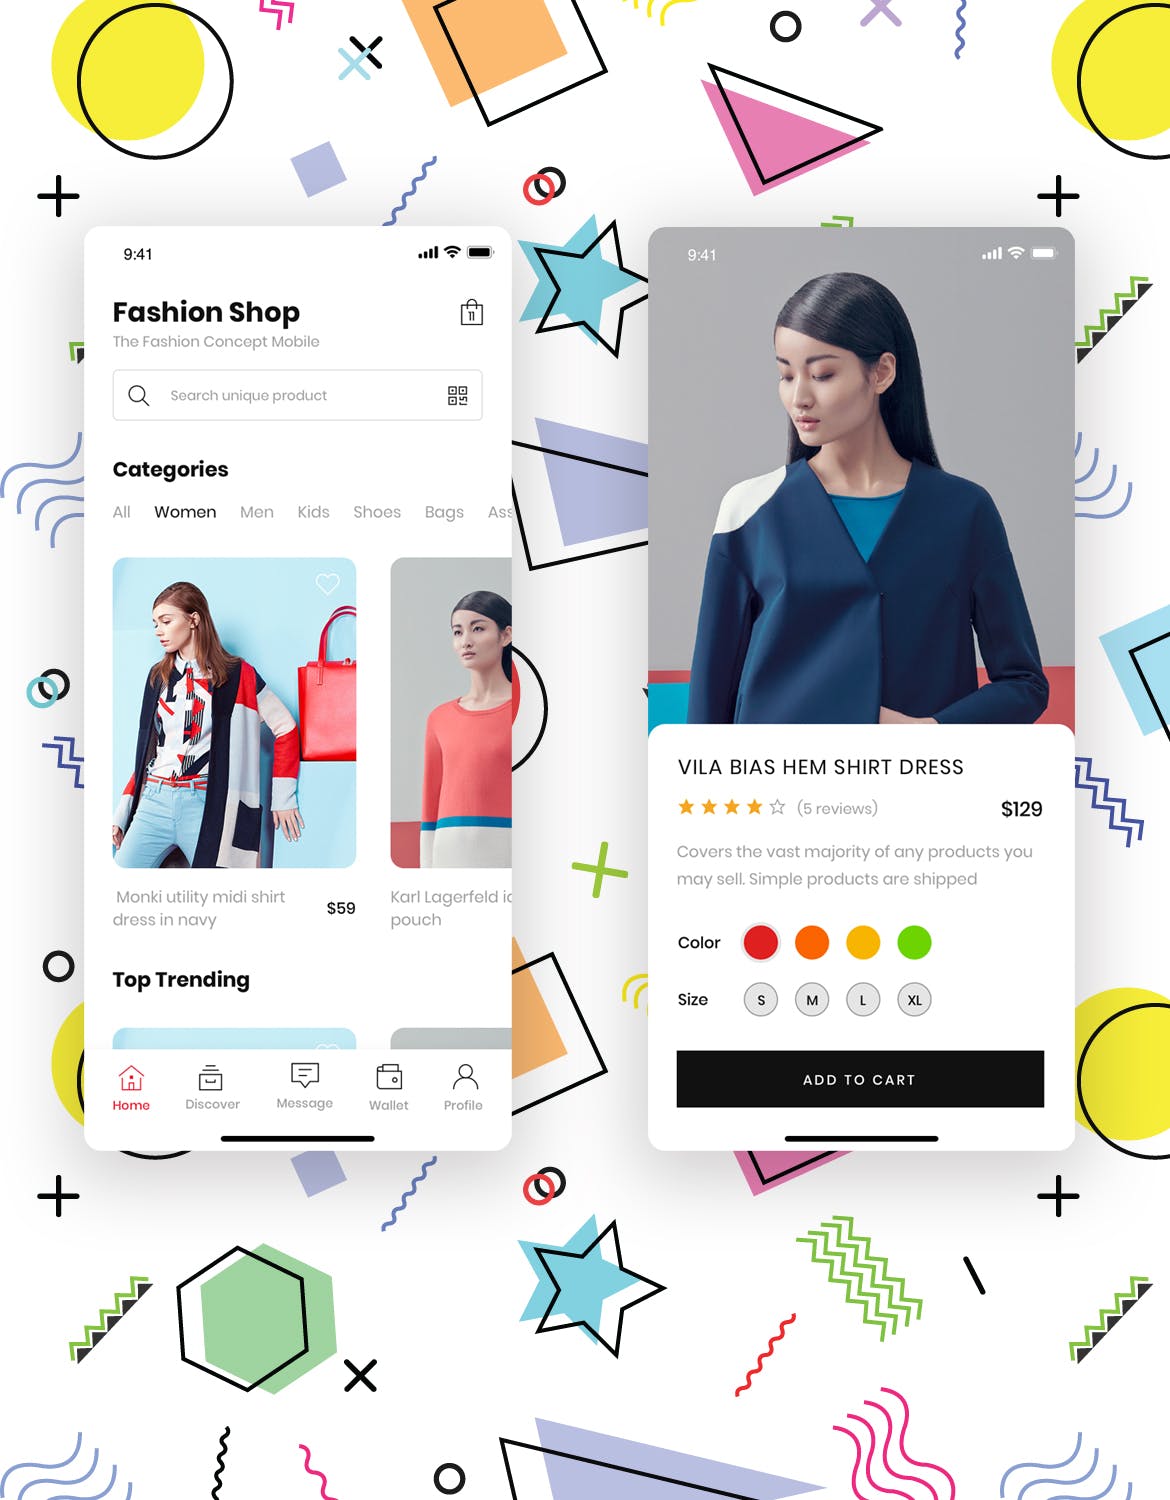 时尚服饰品牌网店APP应用UI设计16设计网精选套件 Fashion Store Mobile App UI Kit插图(1)